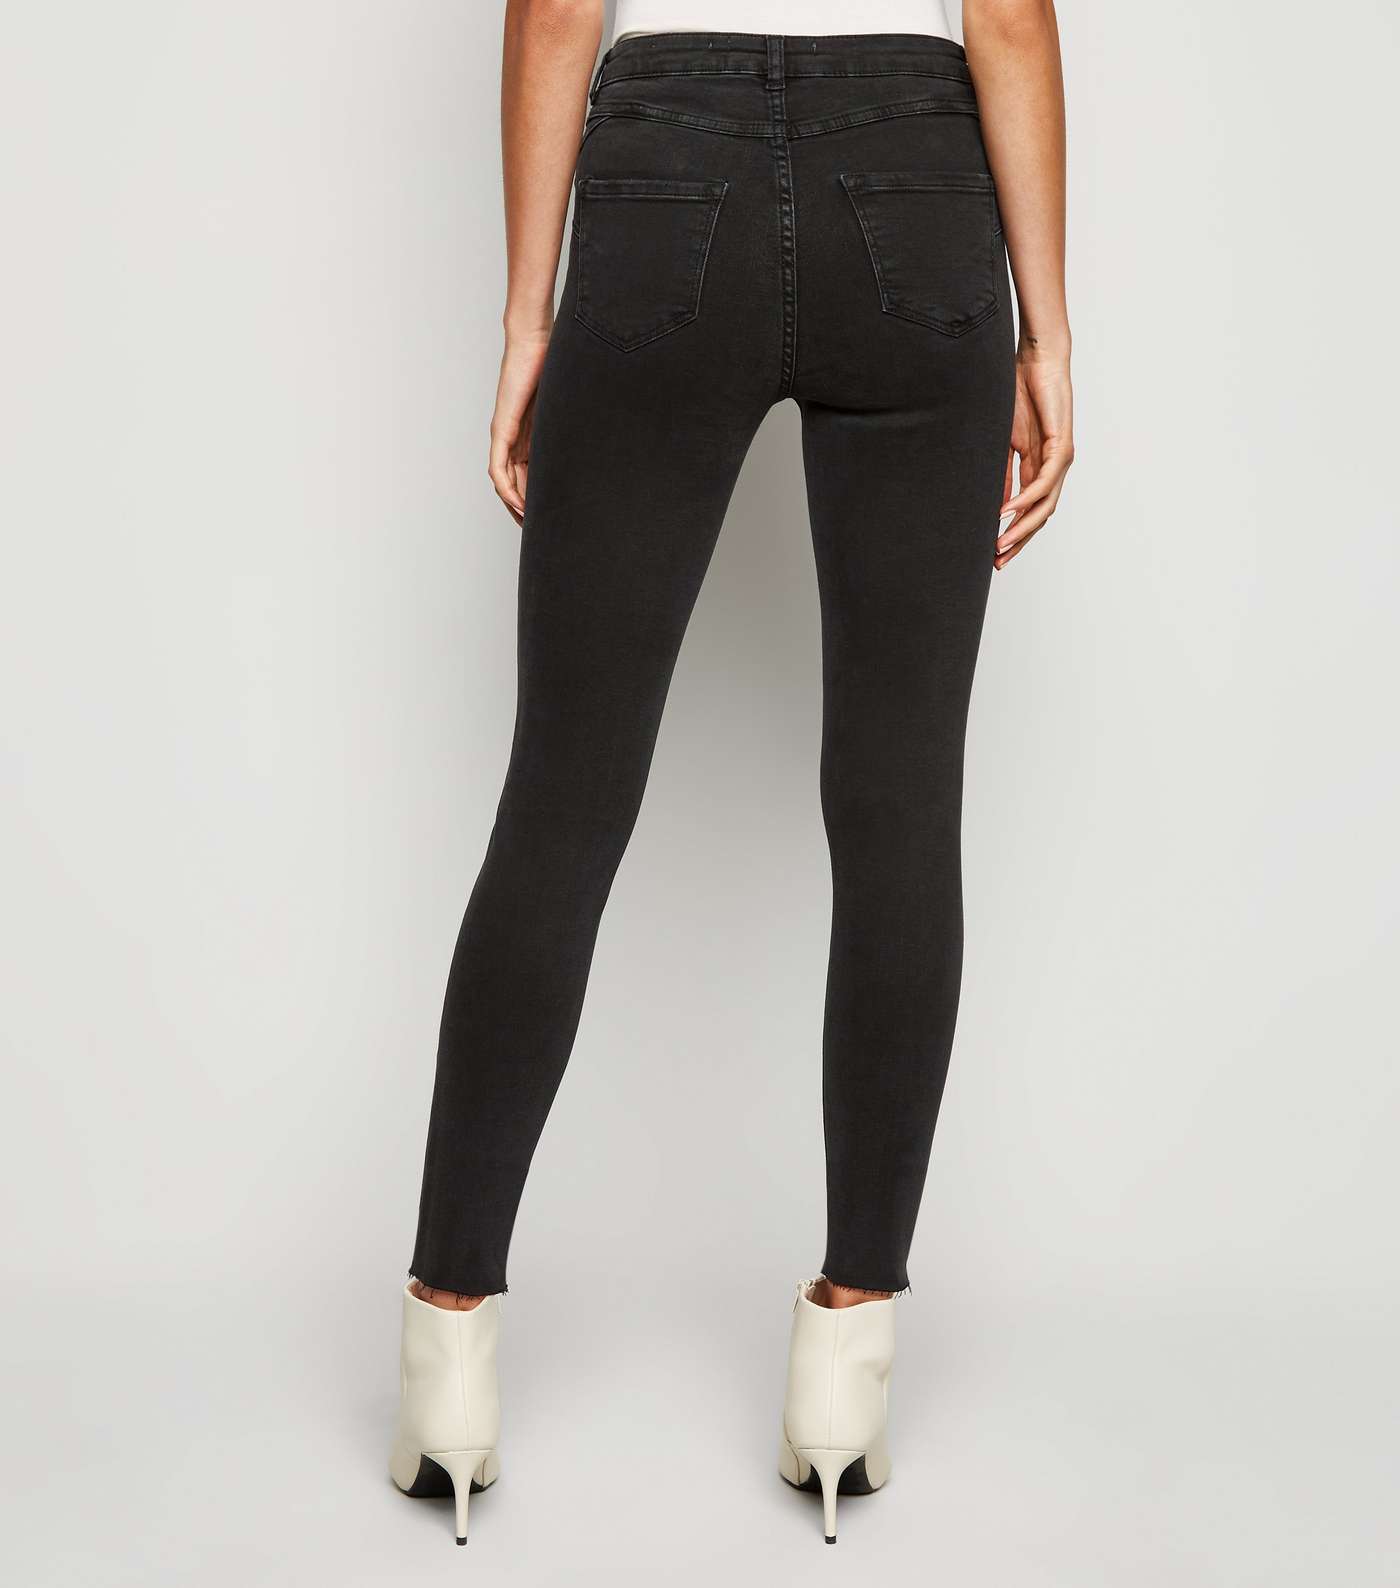 Black Lift & Shape Ripped Jenna Skinny Jeans Image 3